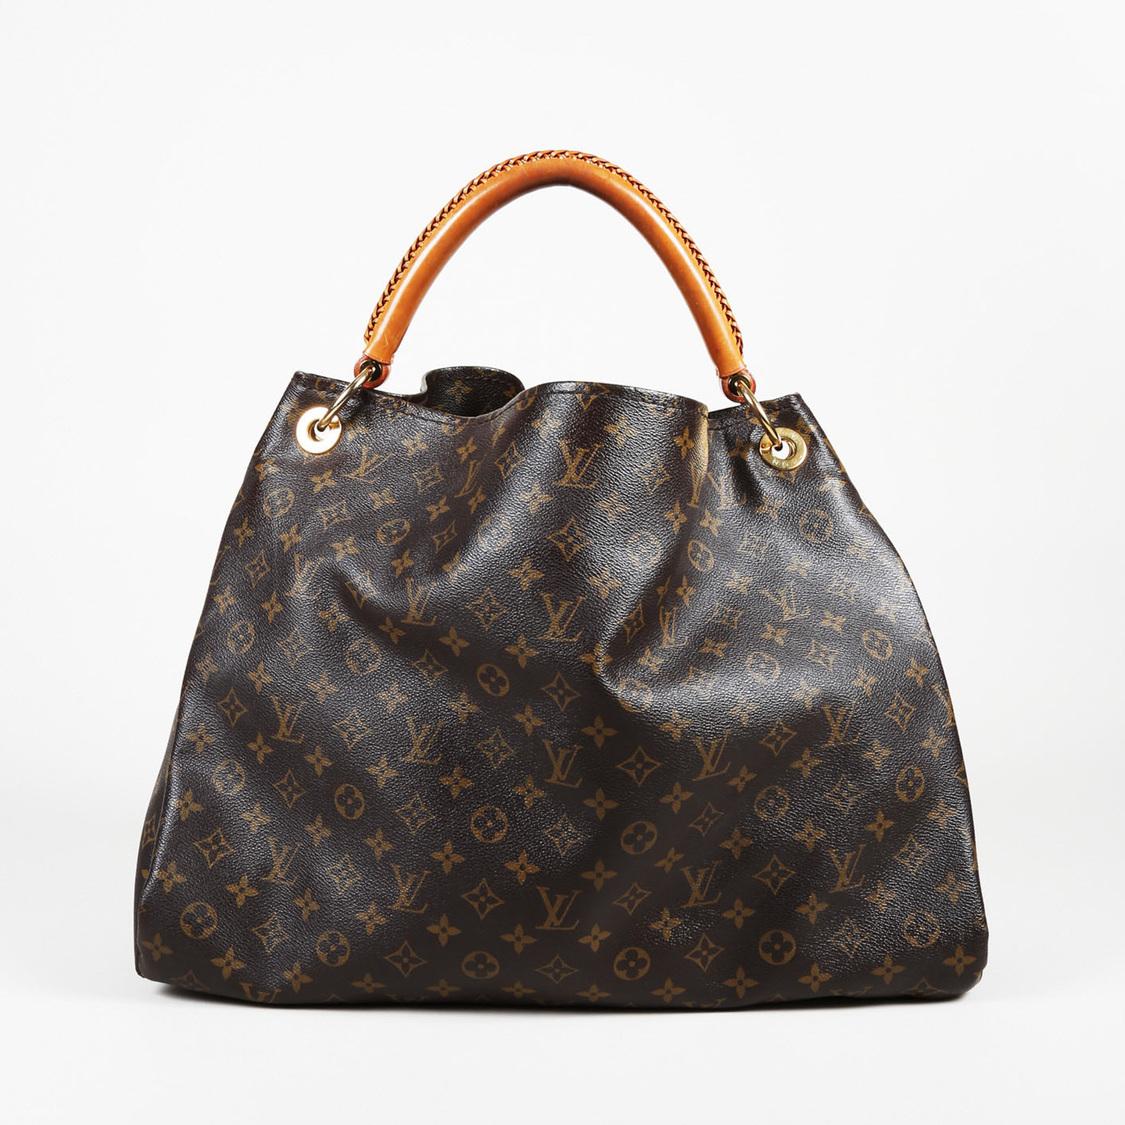 Lyst - Louis Vuitton Artsy Gm Monogram Coated Canvas Top Handle Bag in Brown